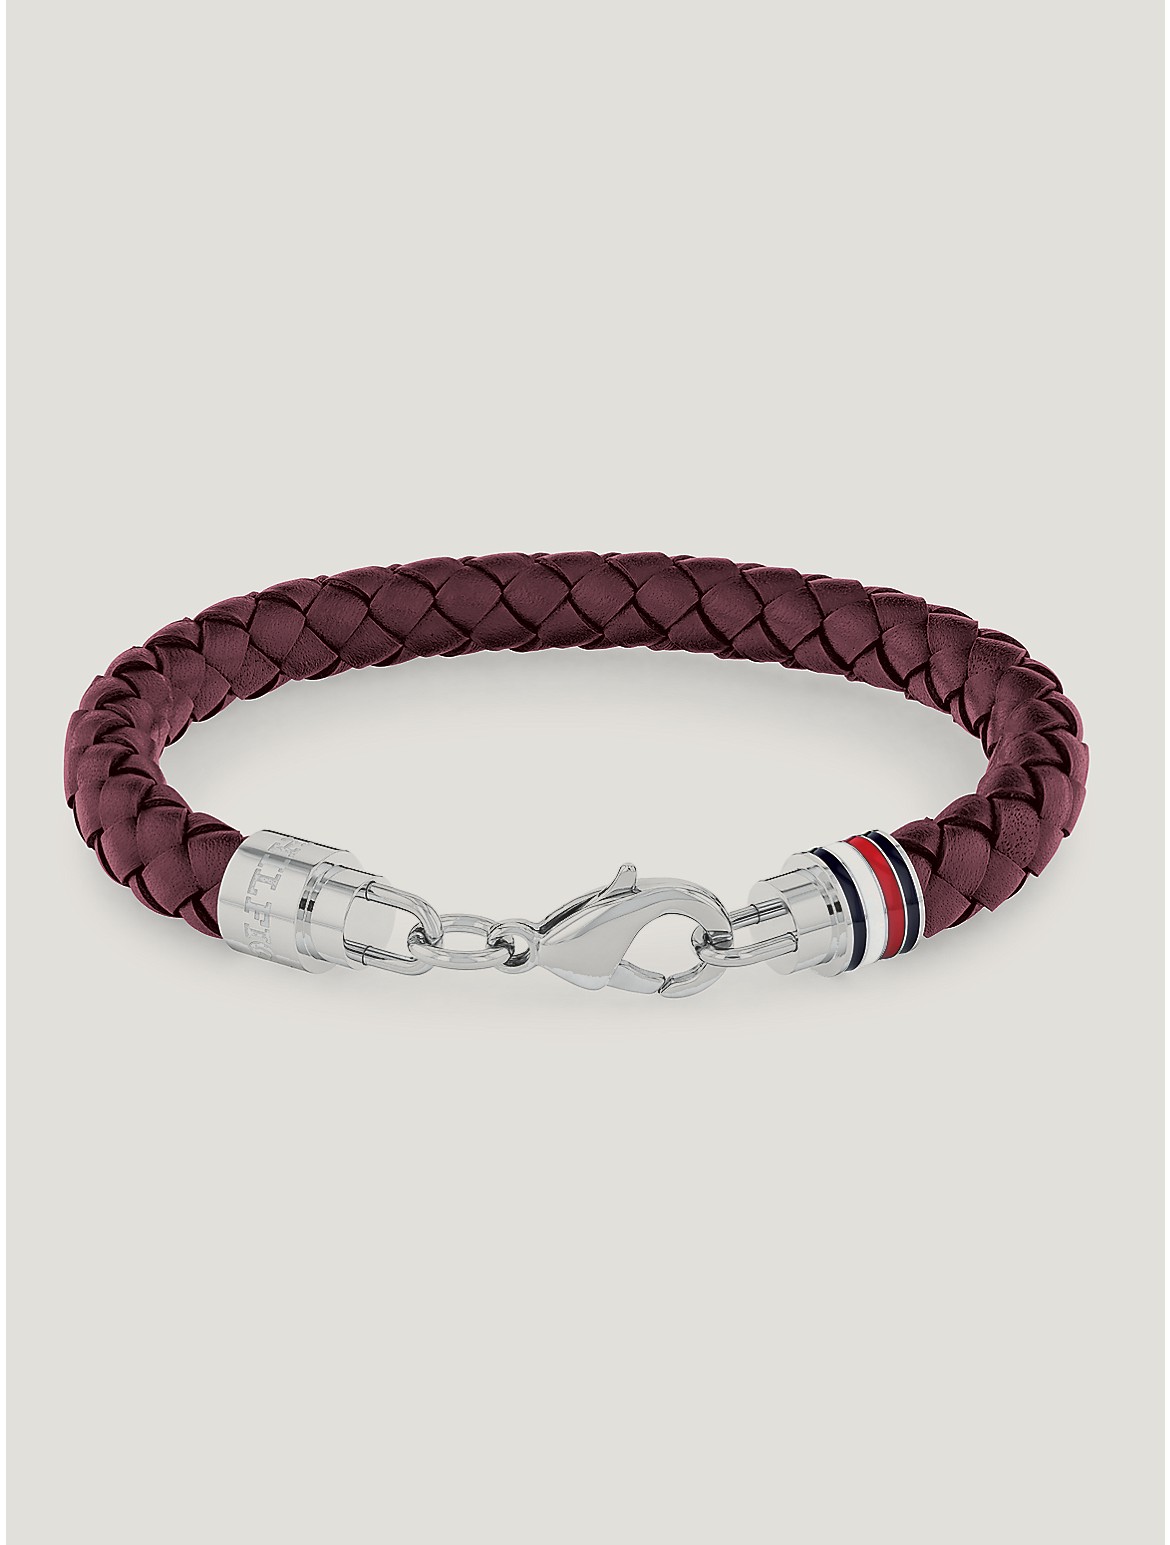 Tommy Hilfiger Men's Signature Braided Red Leather Bracelet